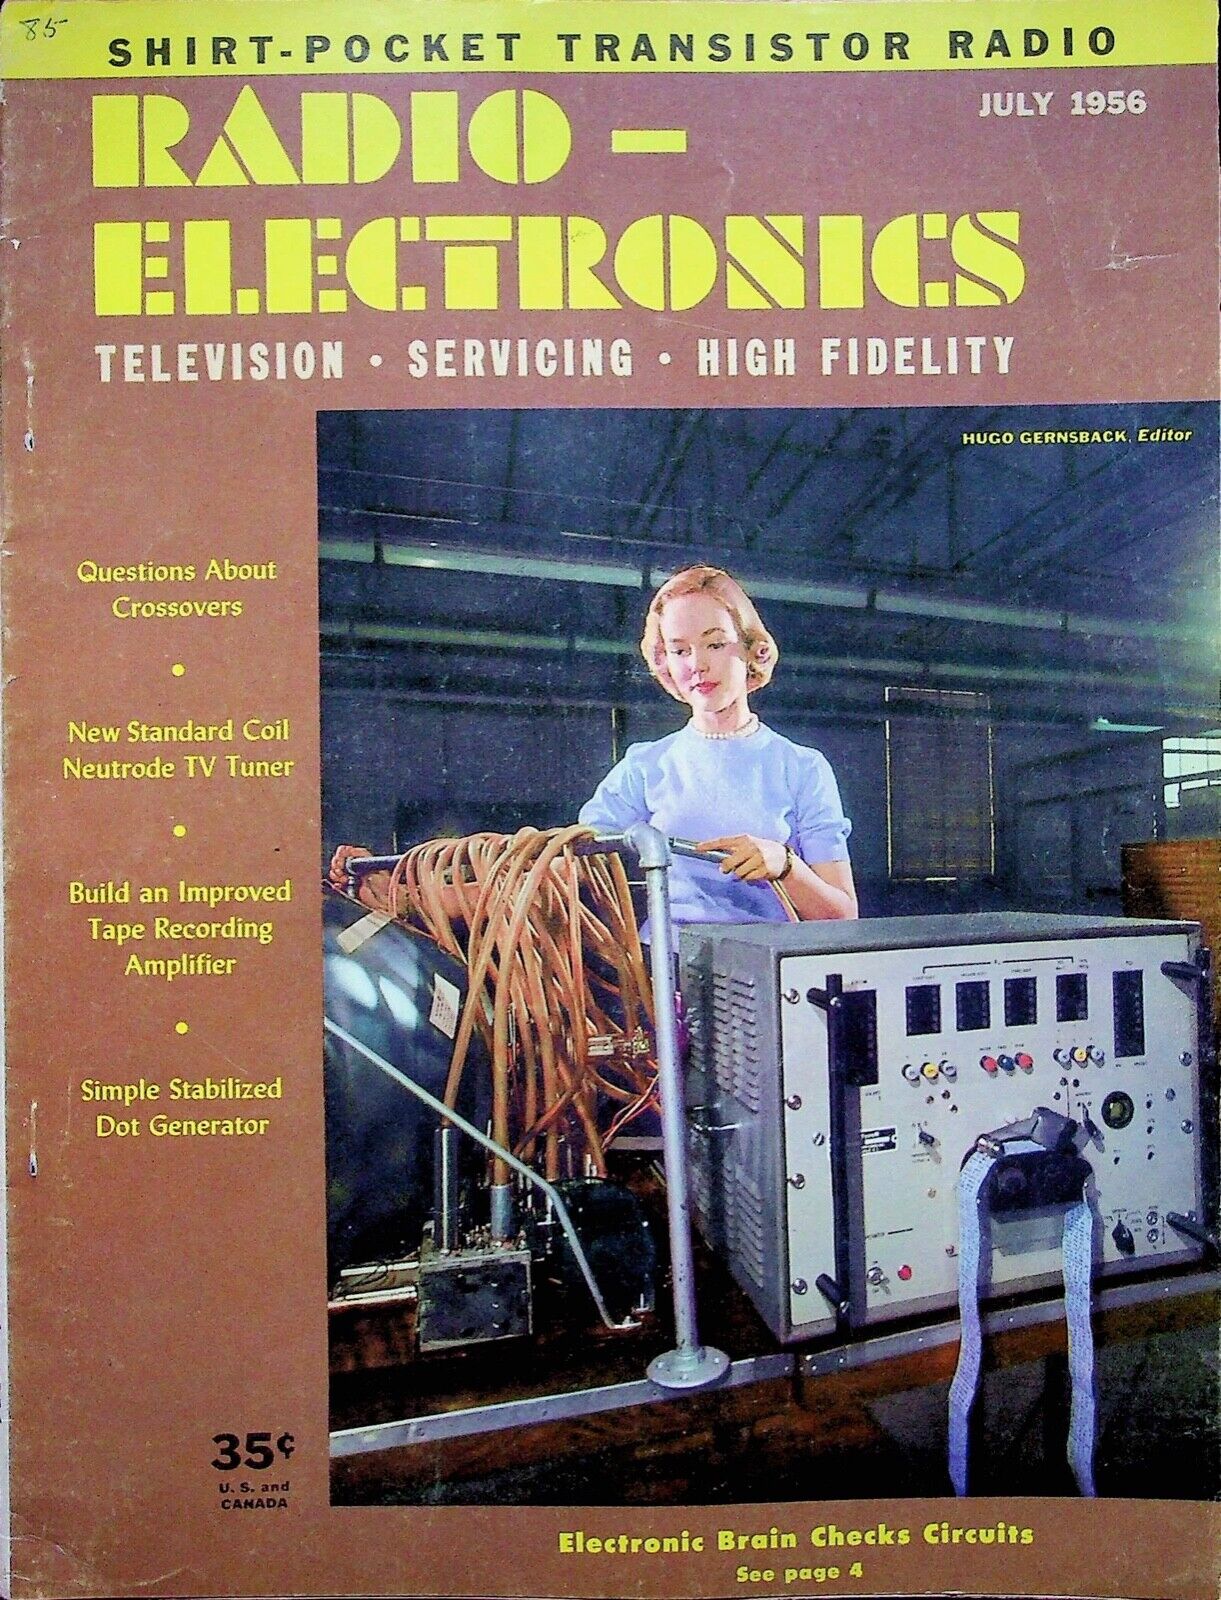 ELECTRONIC BRAIN CHECKS CIRCUITS - Radio - Electronics Magazine 1956 JULY $.35